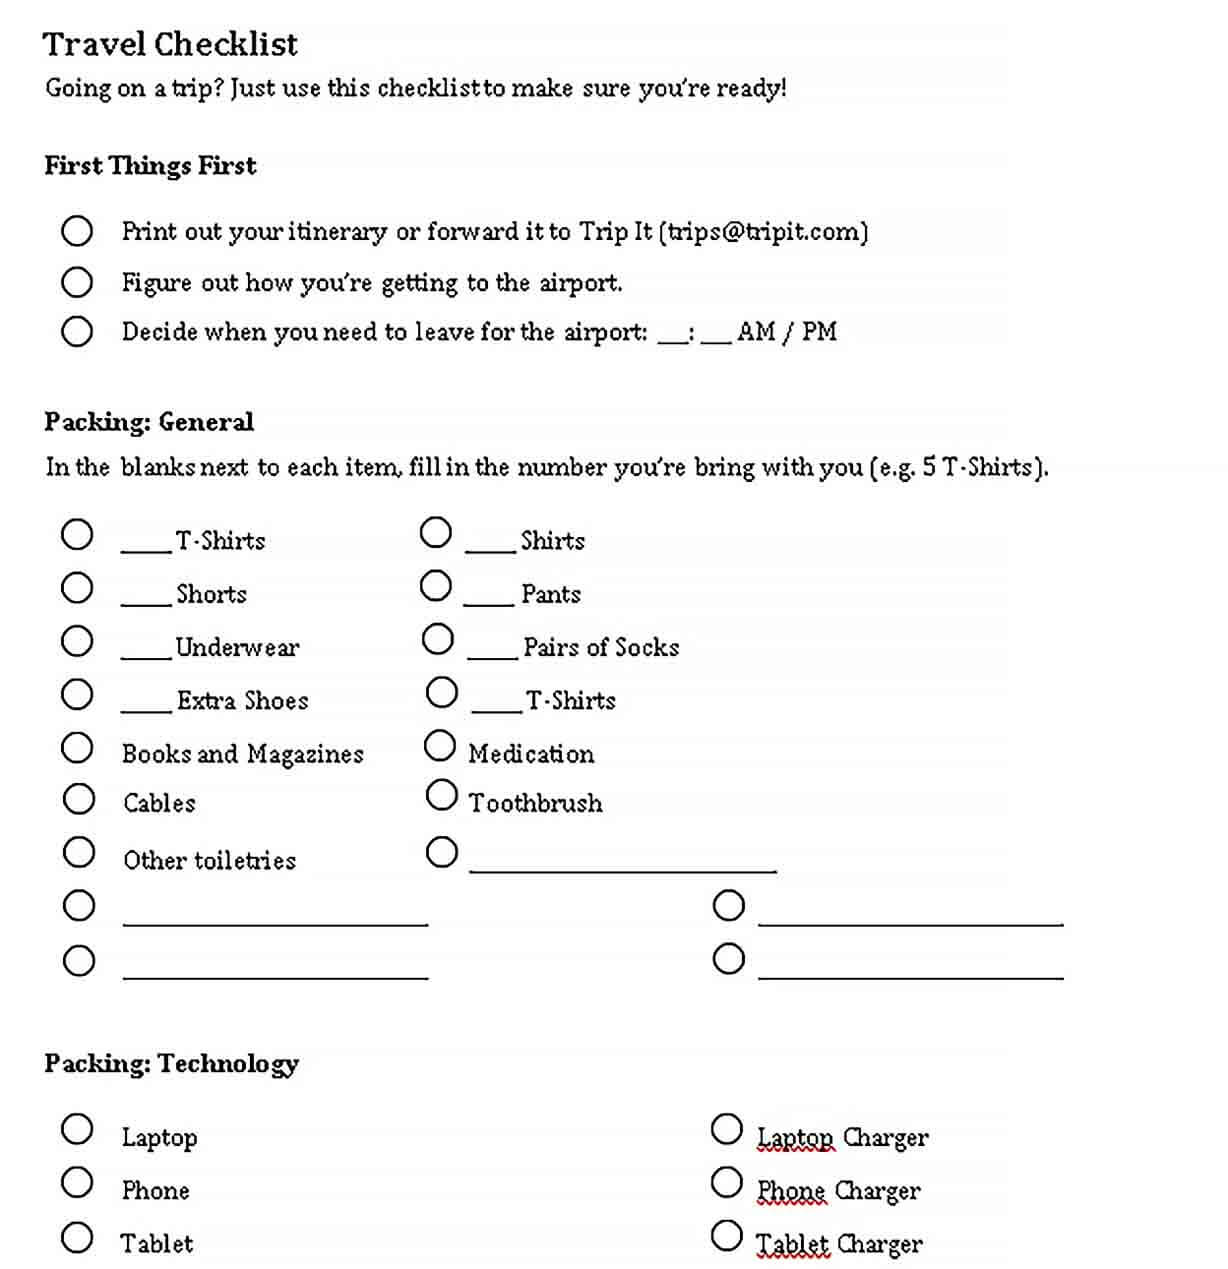 Sample Vacation Travel Checklist